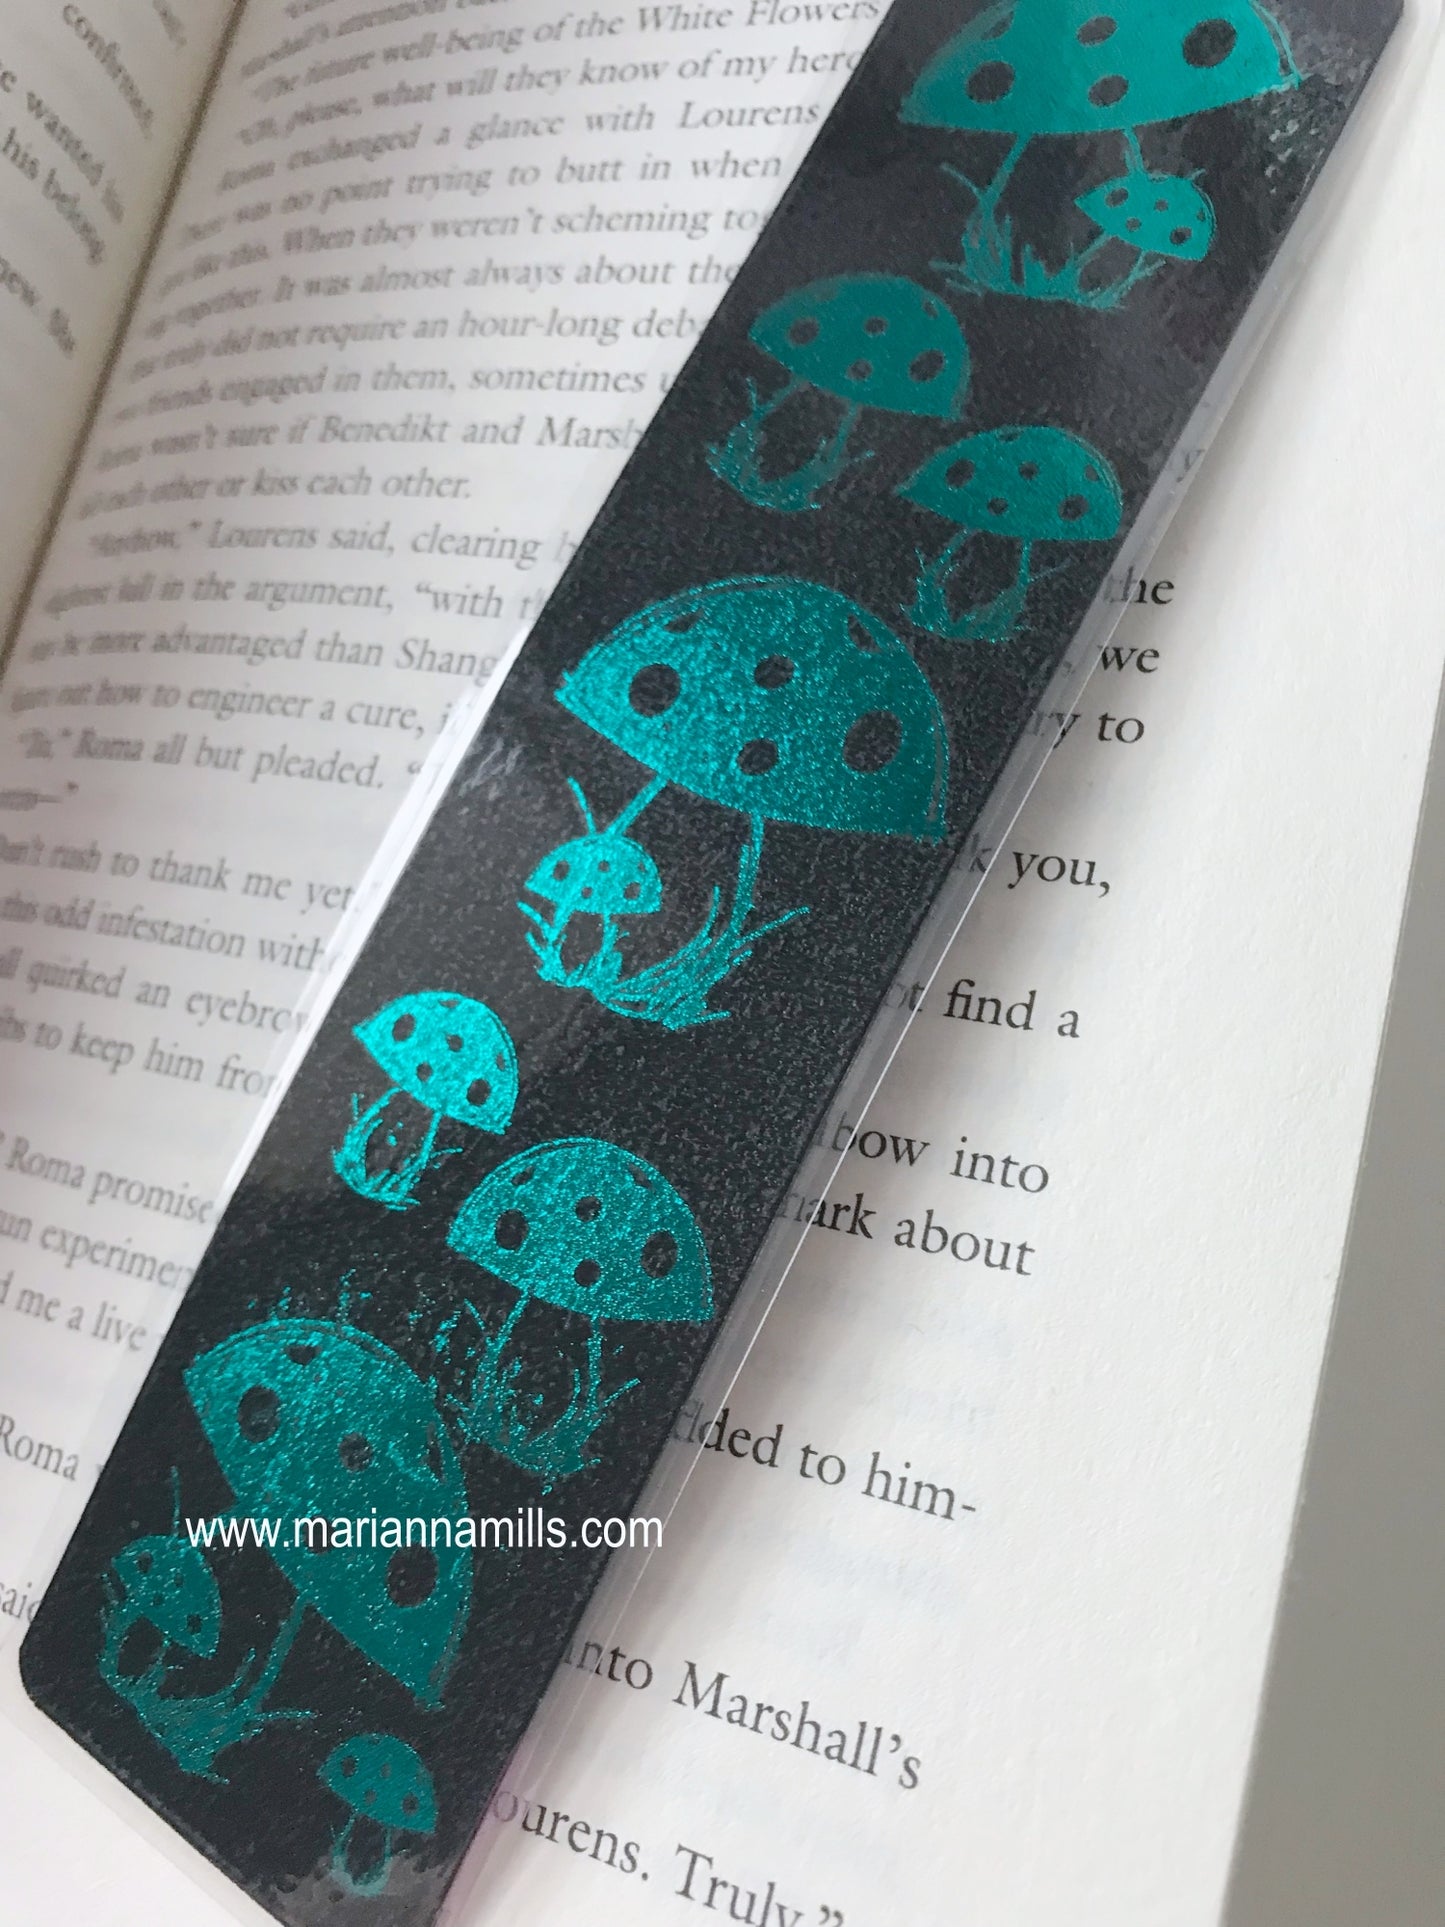 Mushrooms Teal Blue Foil Bookmark Handmade by Marianna Mills